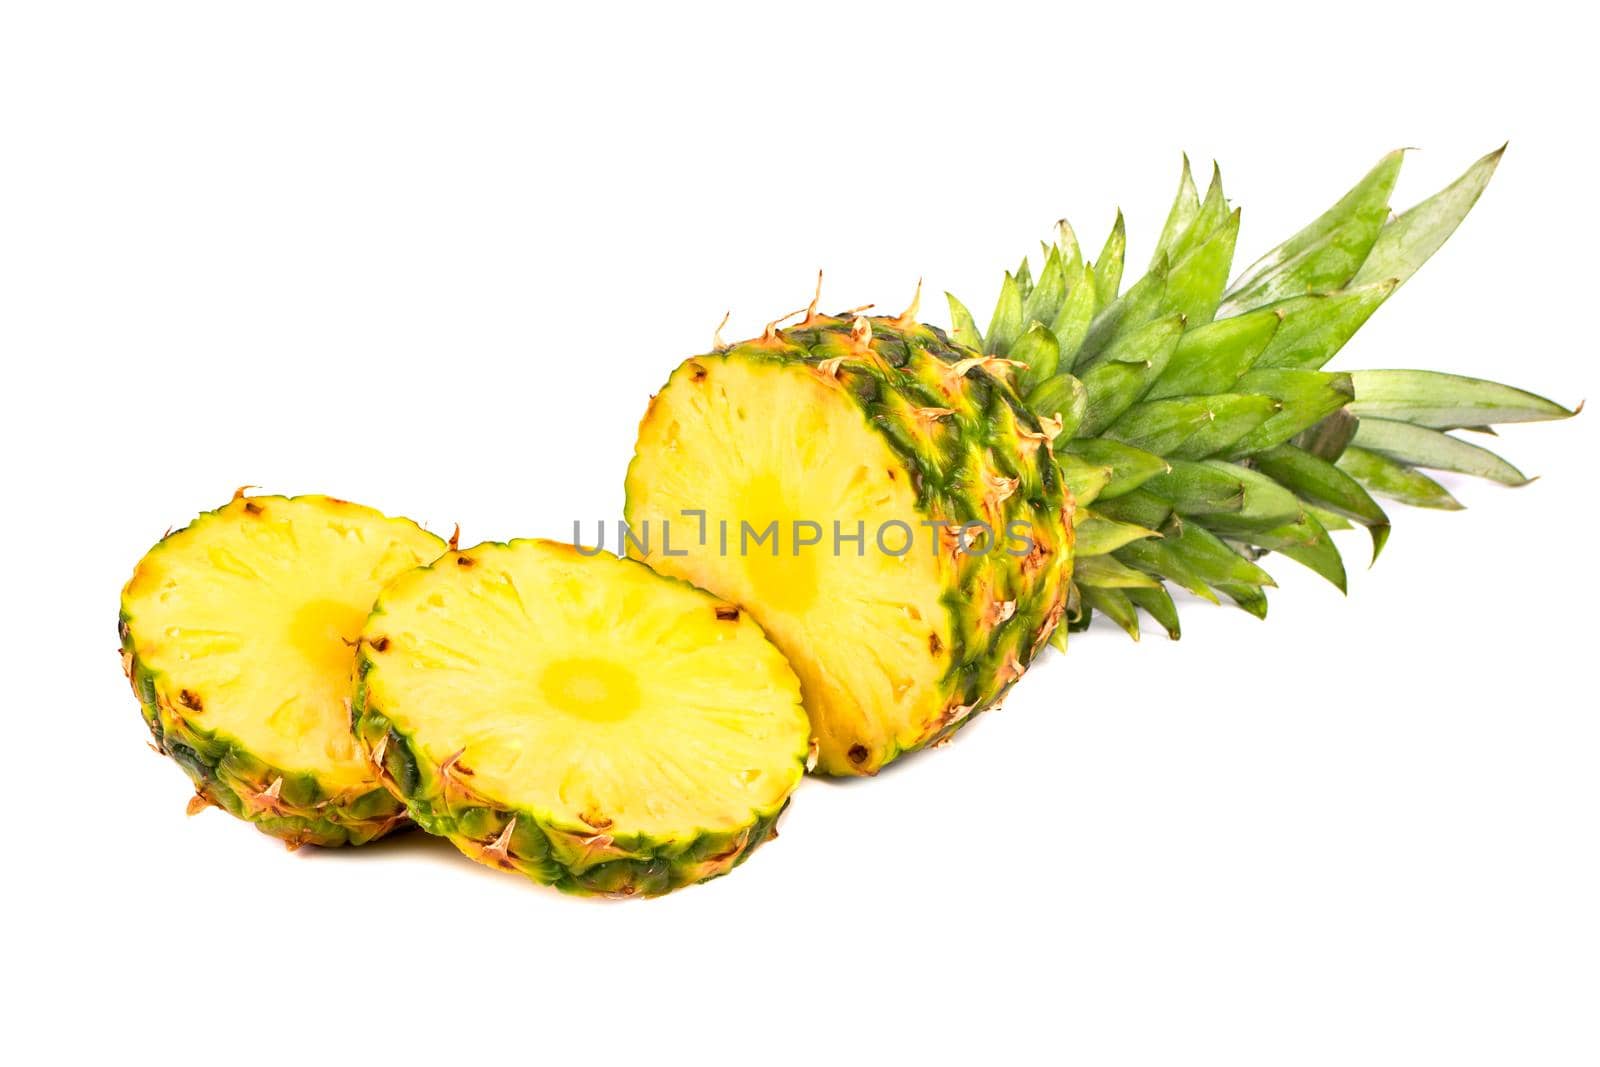 Sliced fresh fruit pineapple on a white background